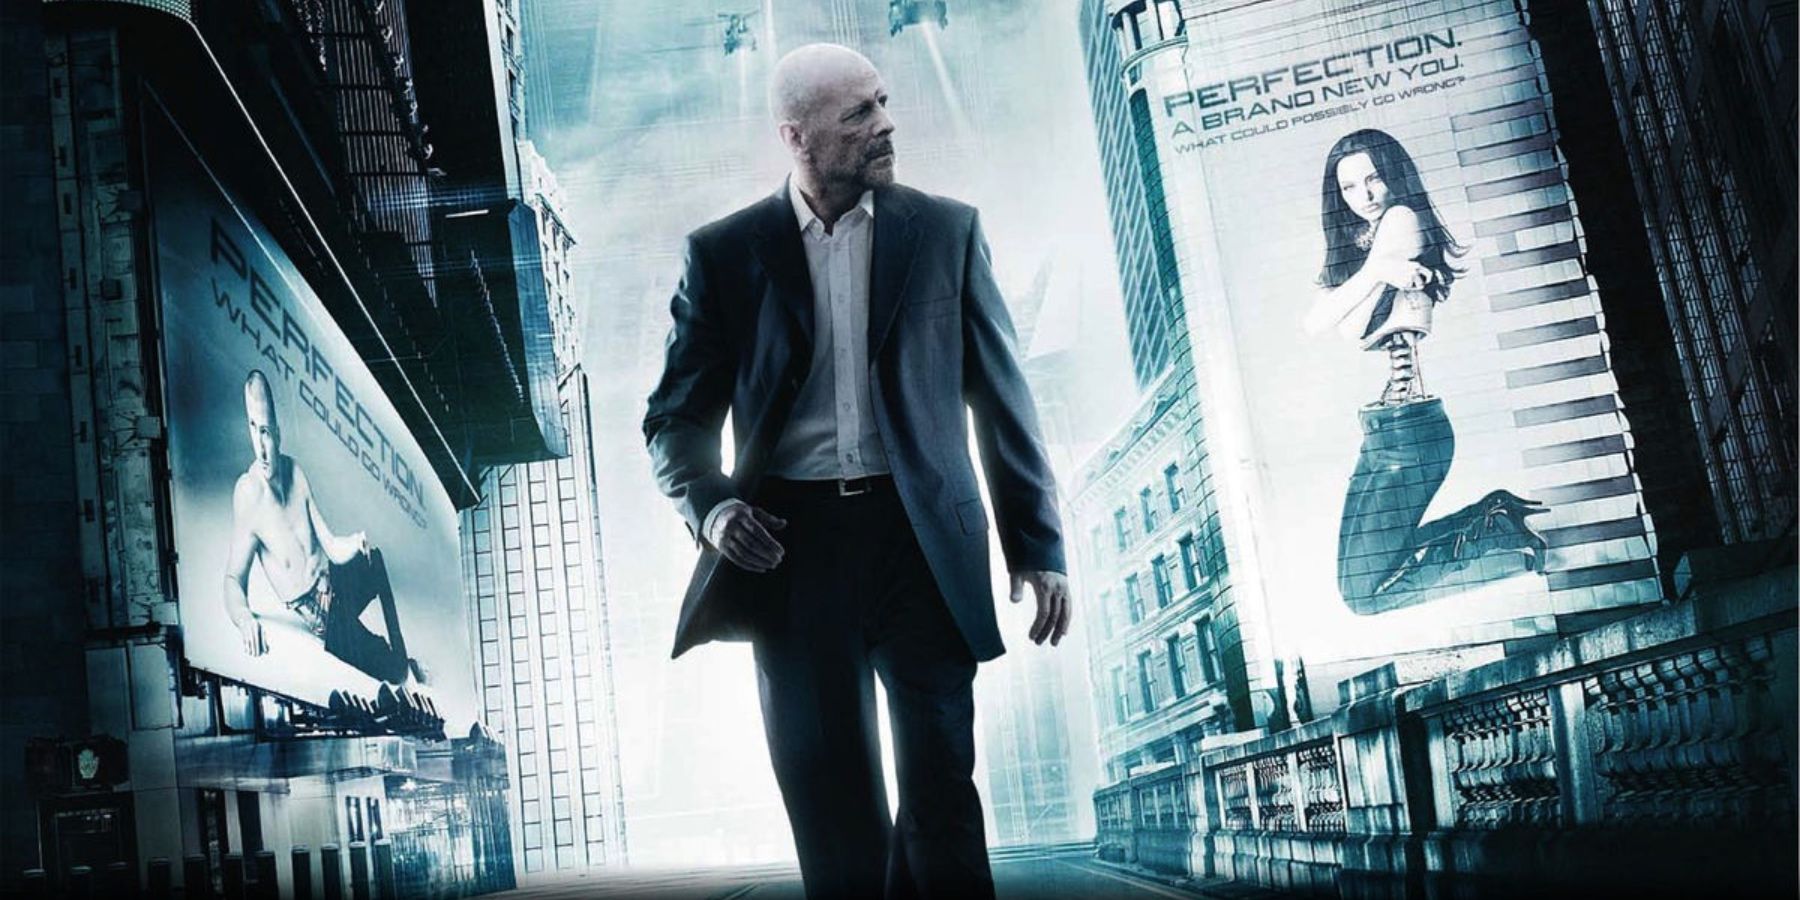 Bruce Willis Stars In This Underrated Sci Fi Thriller